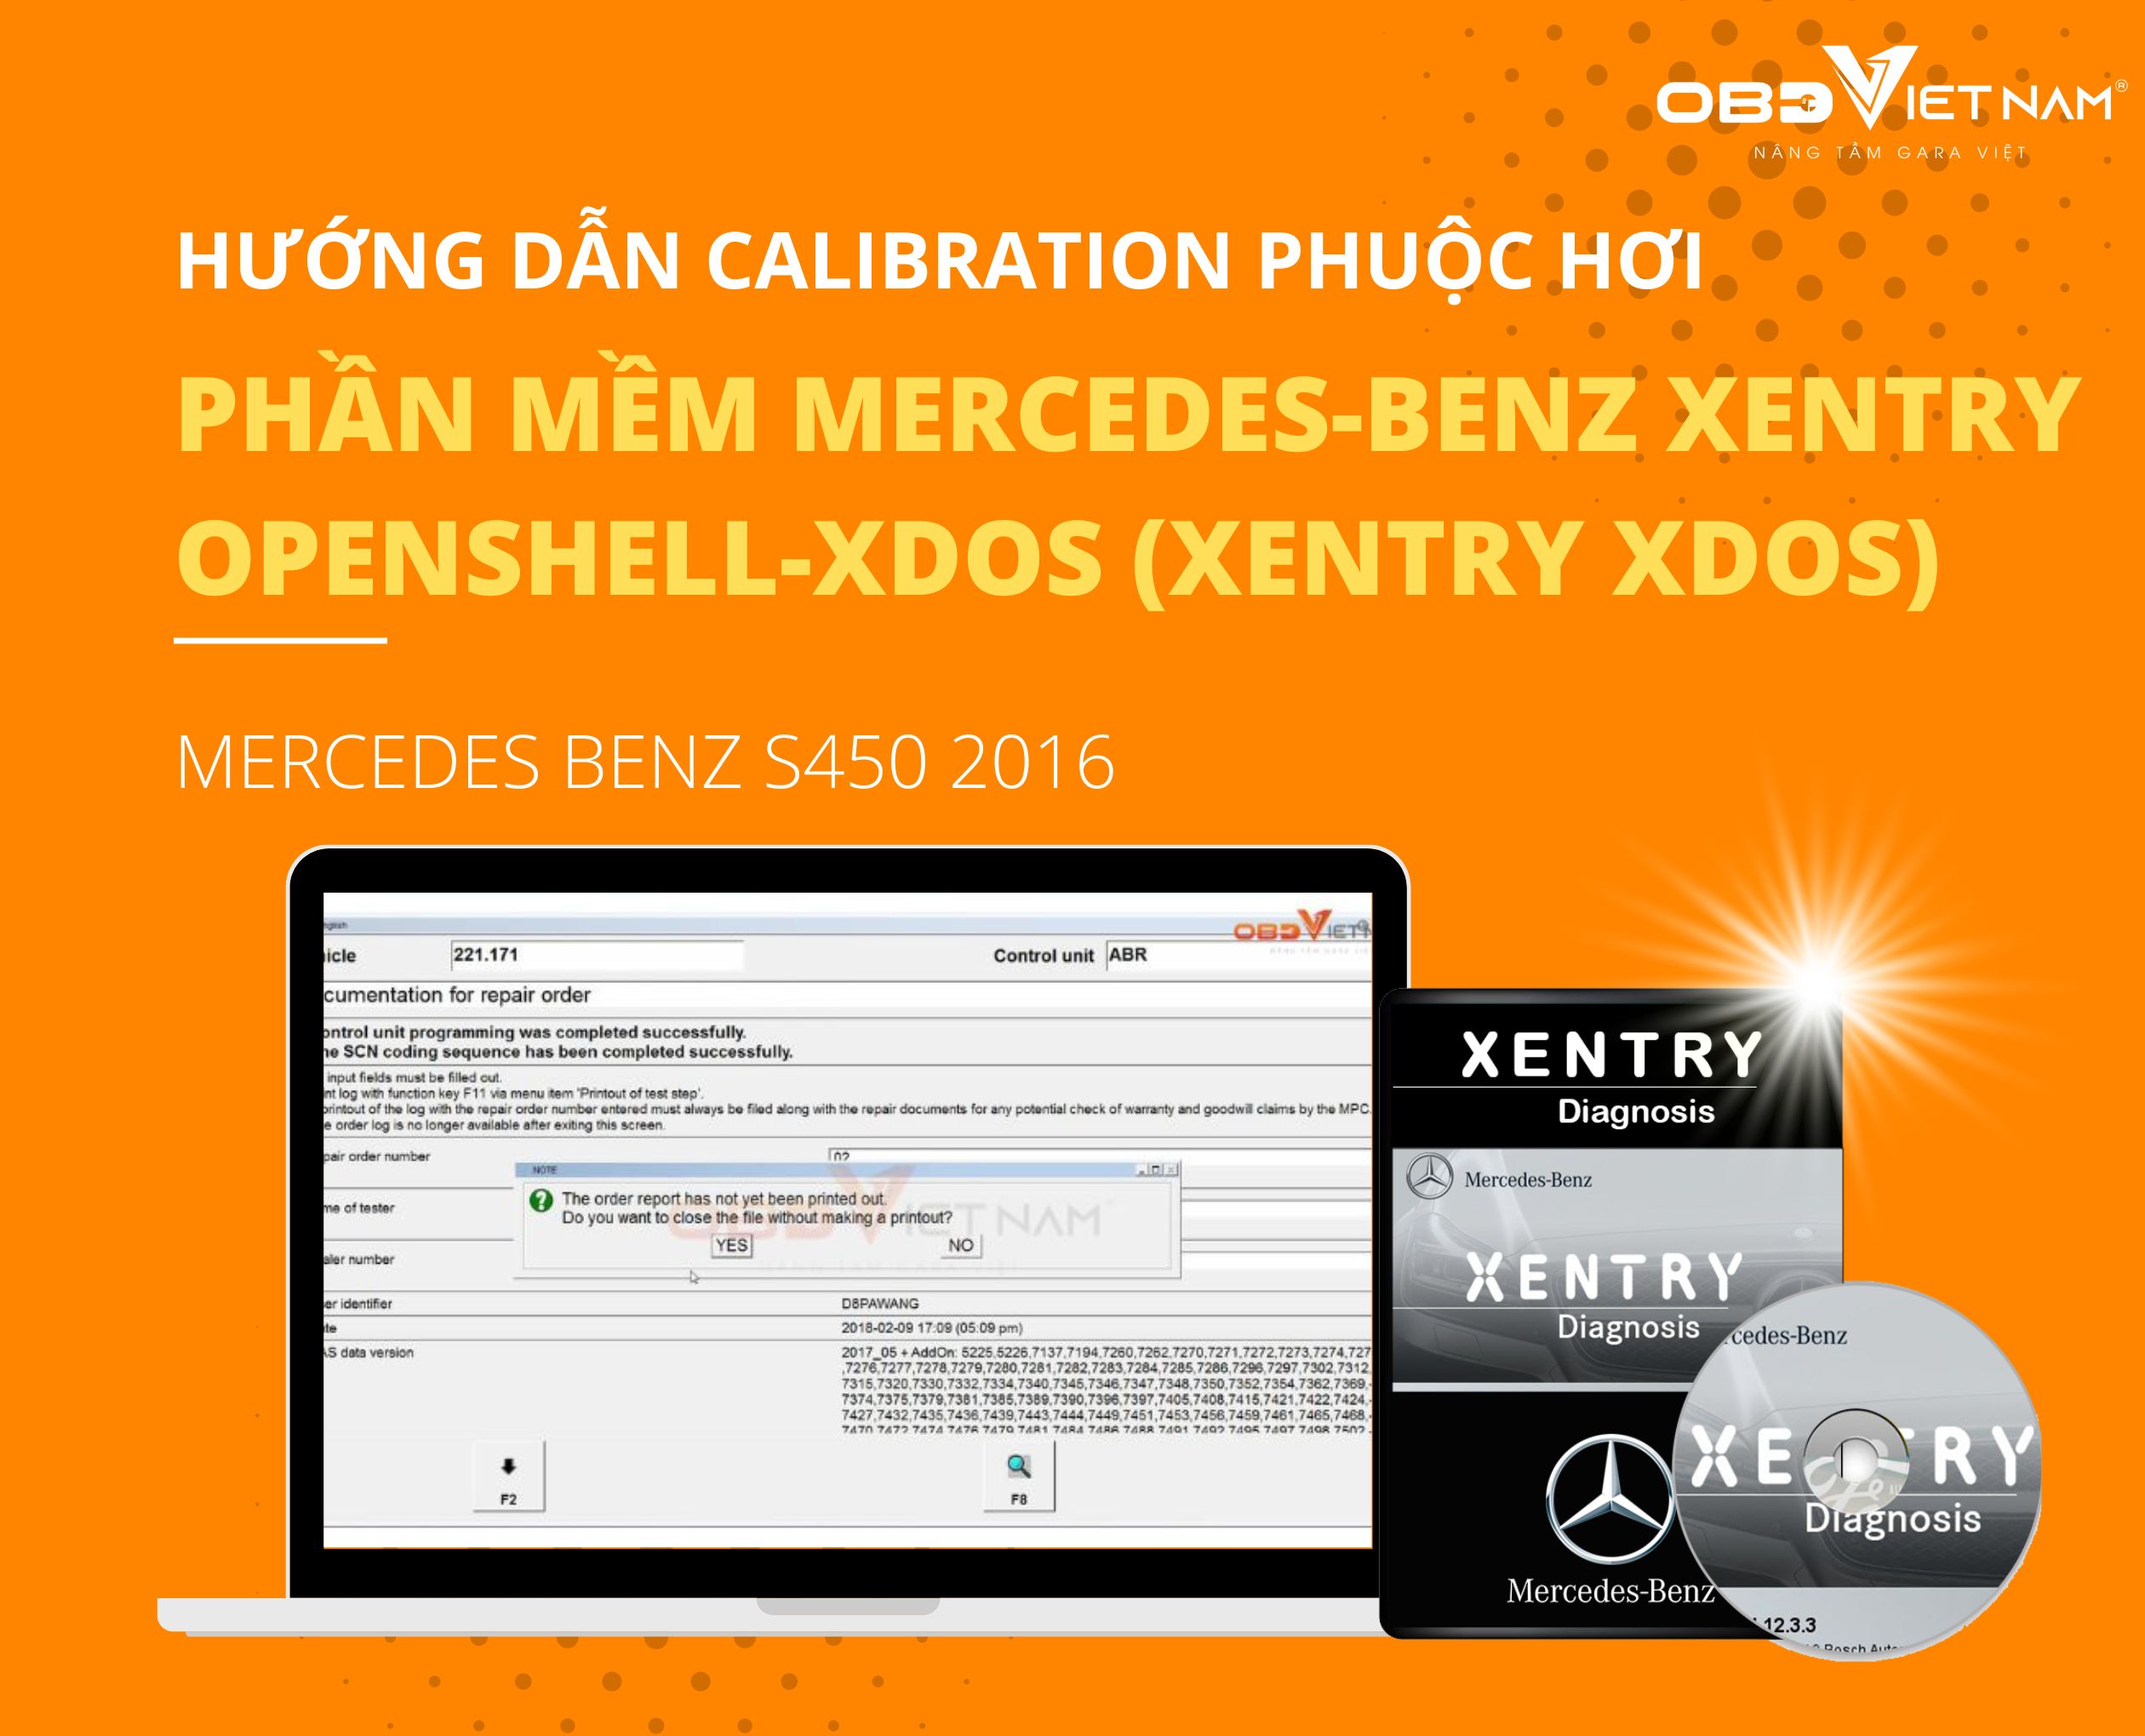 huong-dan-calibration-phuoc-hoi-mercedes-benz-s450-2016-dang-phan-mem-xentry-obdvietnam (1)